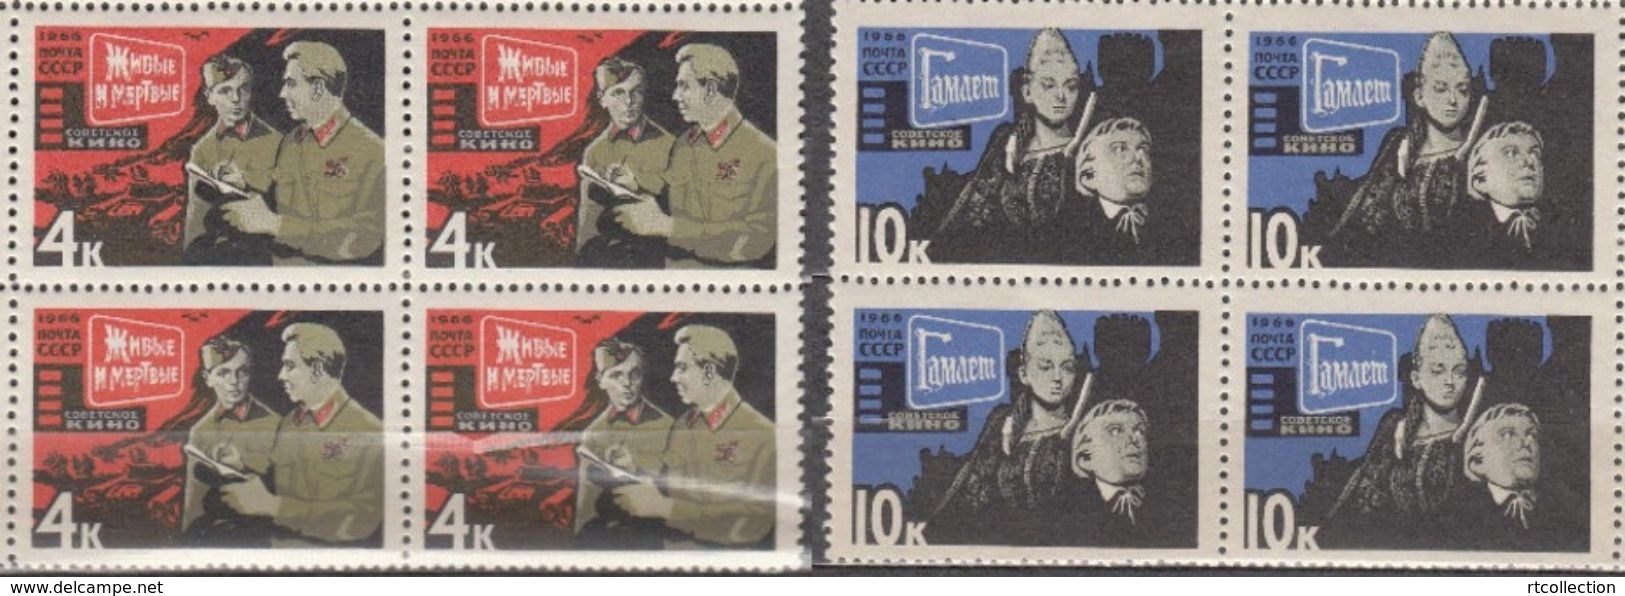 USSR Russia 1966 Block Film Scenes Hamlet The Quick And The Dead World War WW2 ART Cinema Military Stamps MNH Mi 3190-91 - Cinema